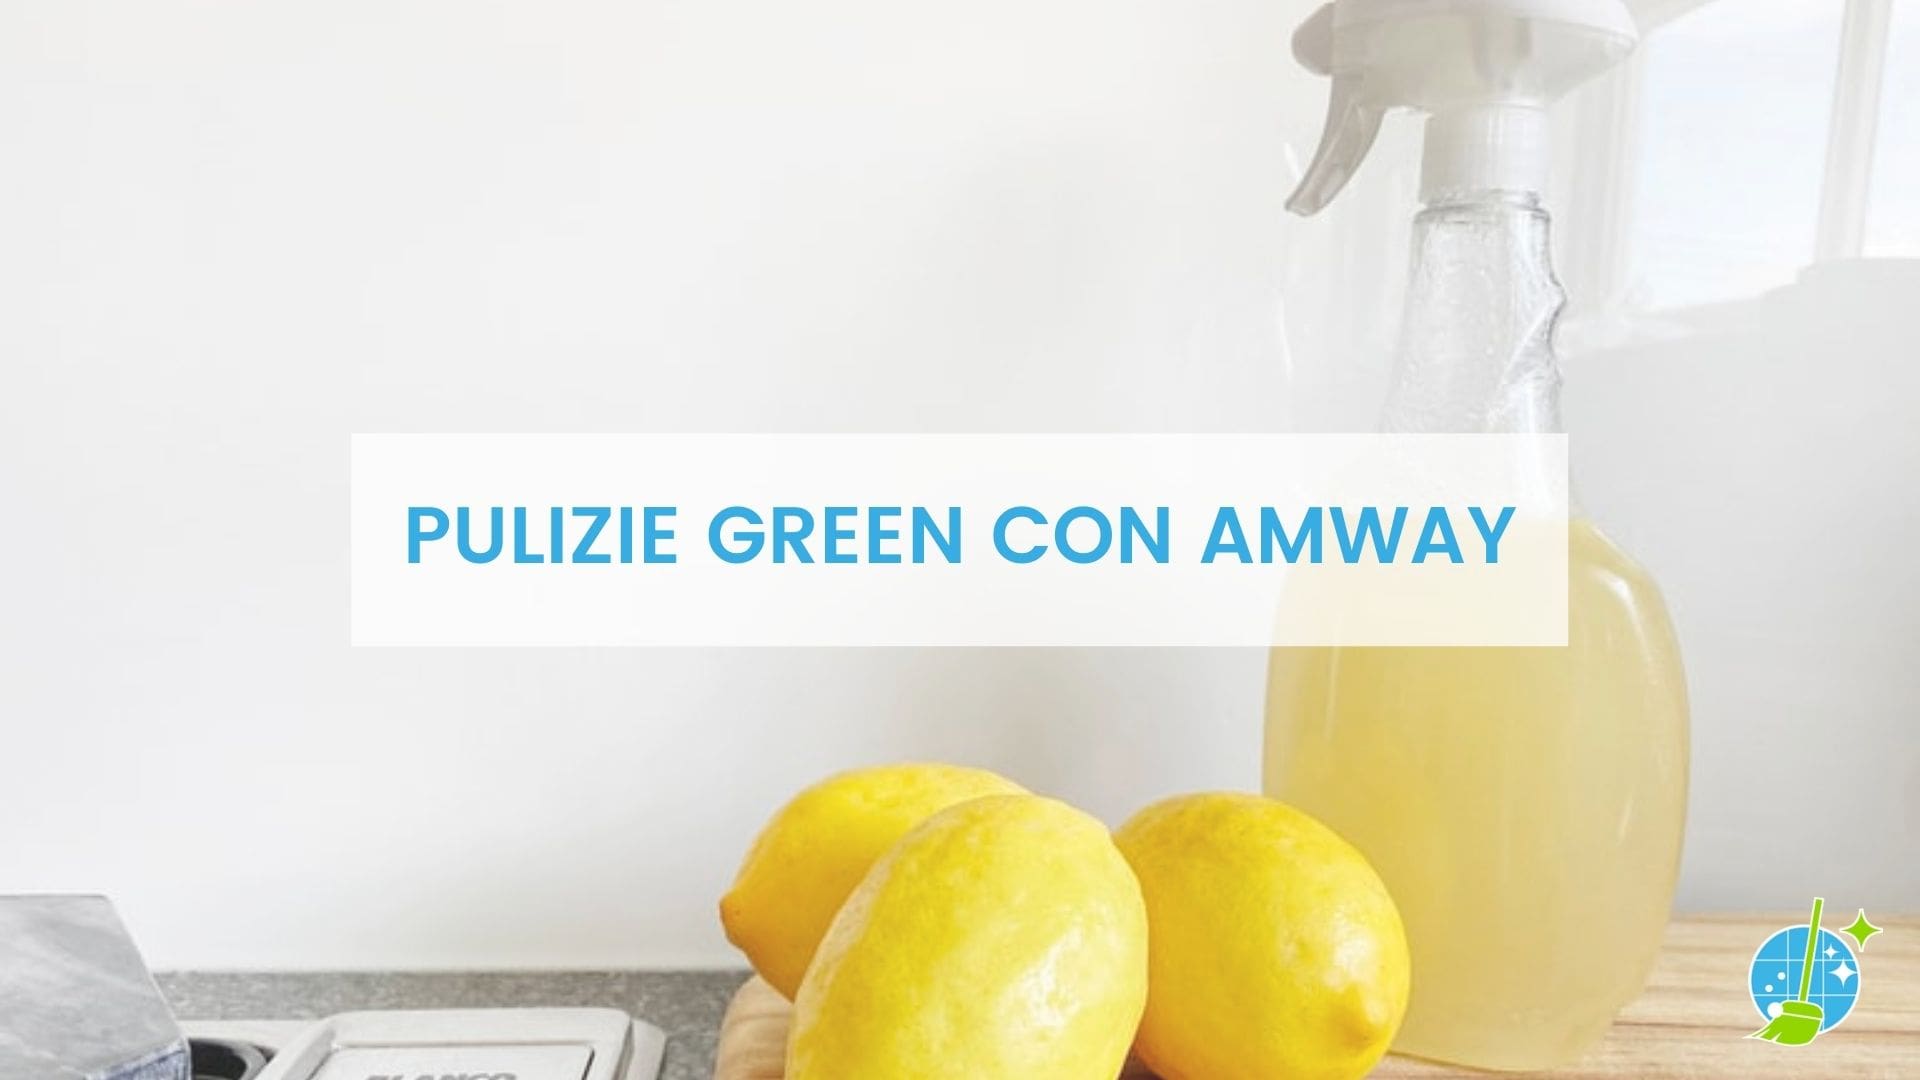 Pulizie green con amway.jpg